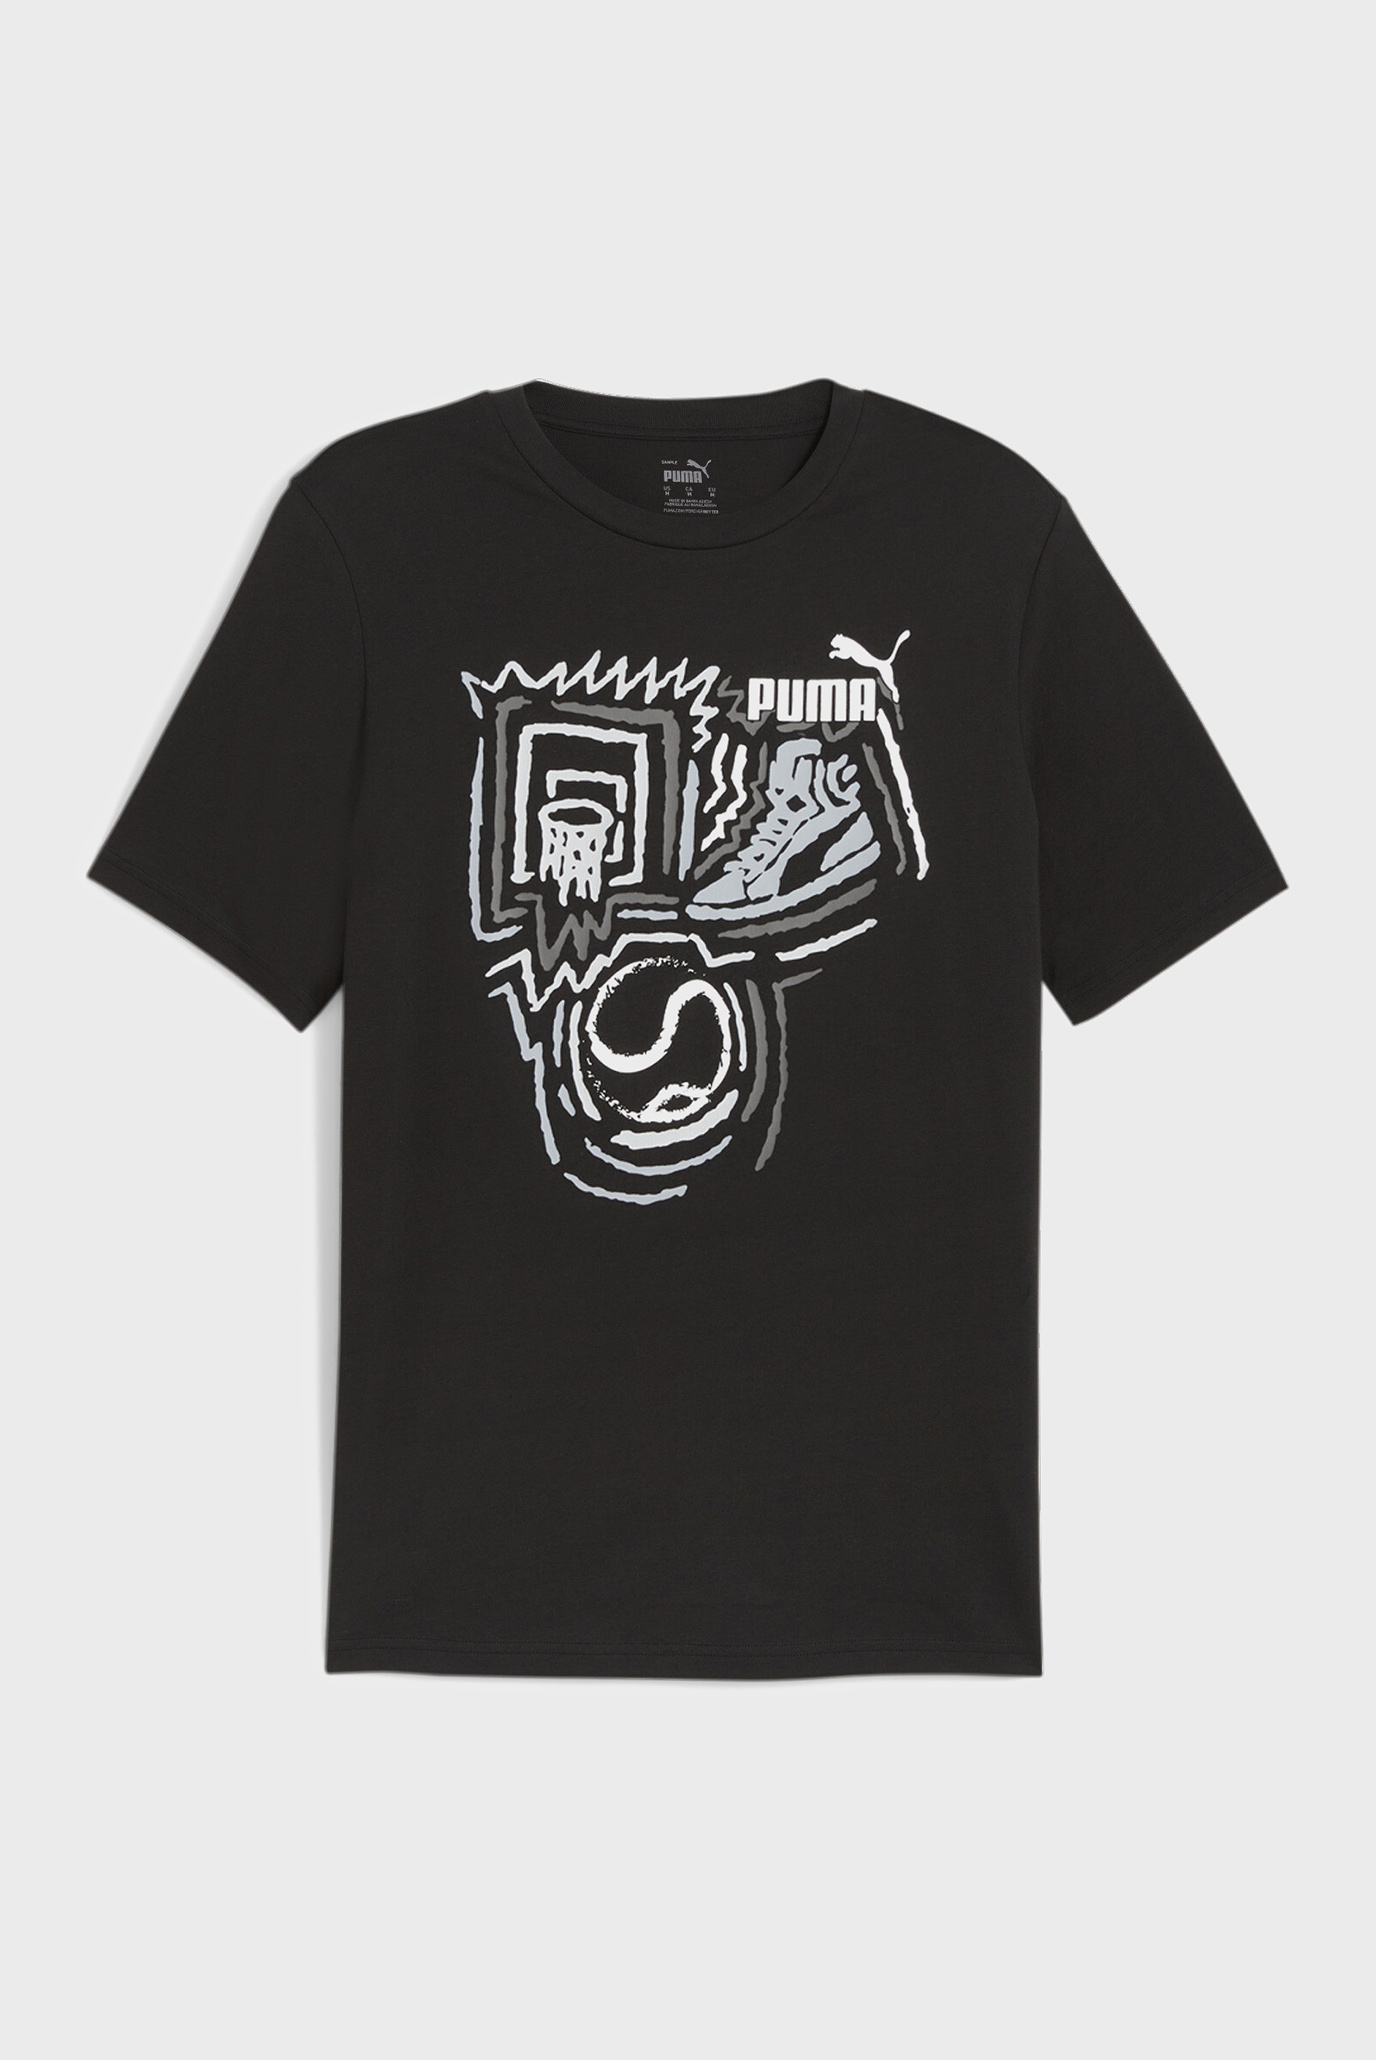 Мужская черная футболка с графическим рисунком GRAPHICS Year of Sports Men's Tee 1